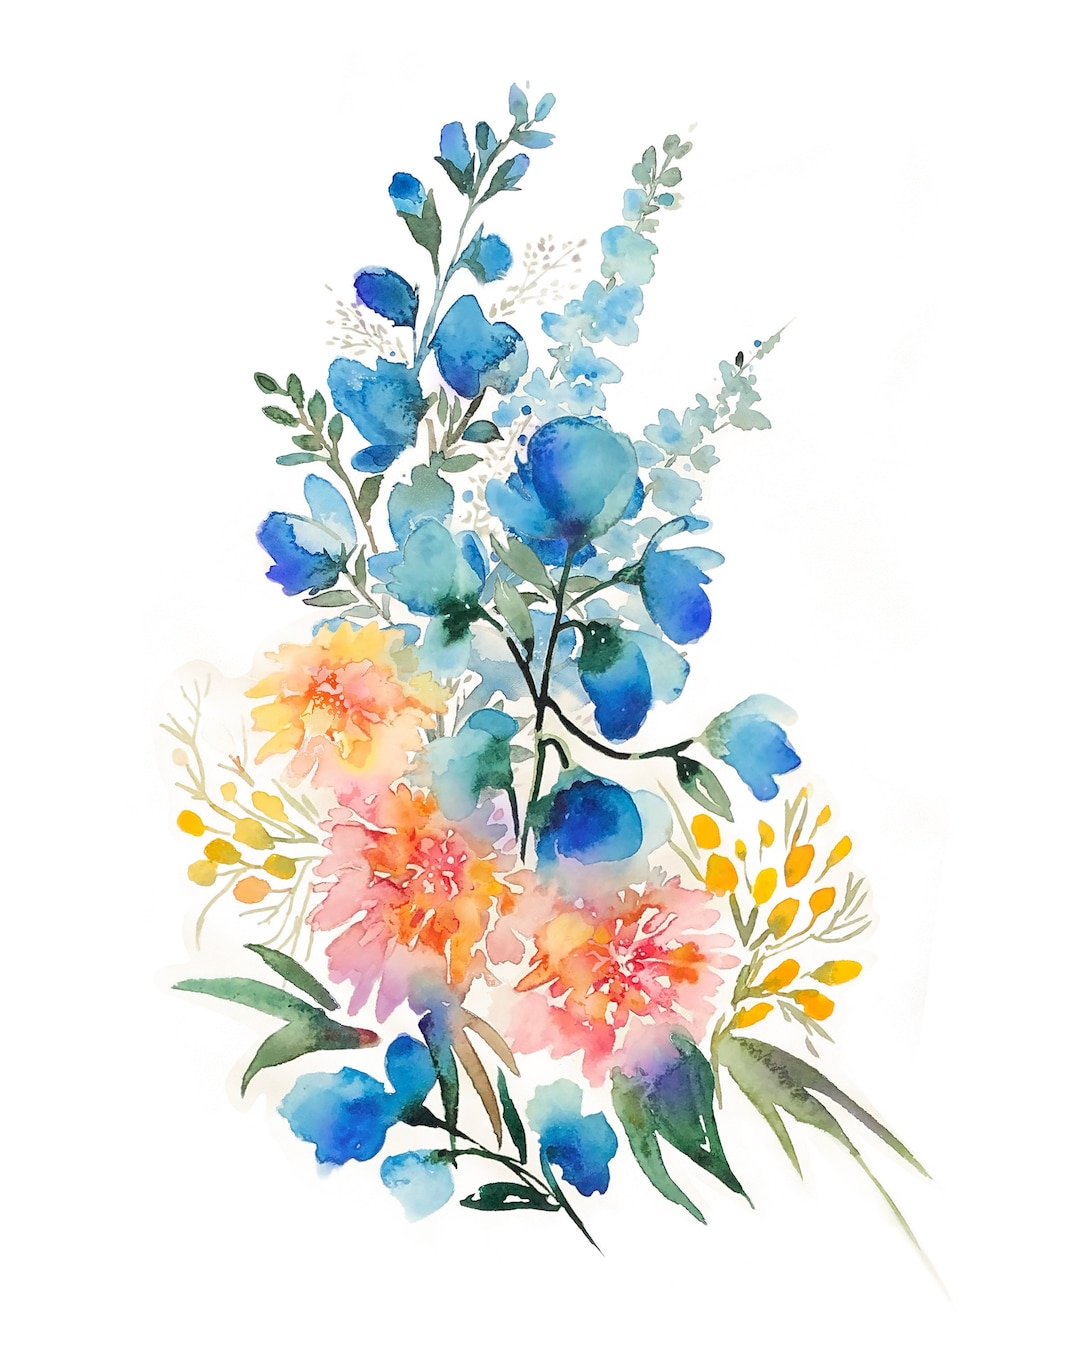 Beginner’s Guide to Watercolor Painting Flowers插图3